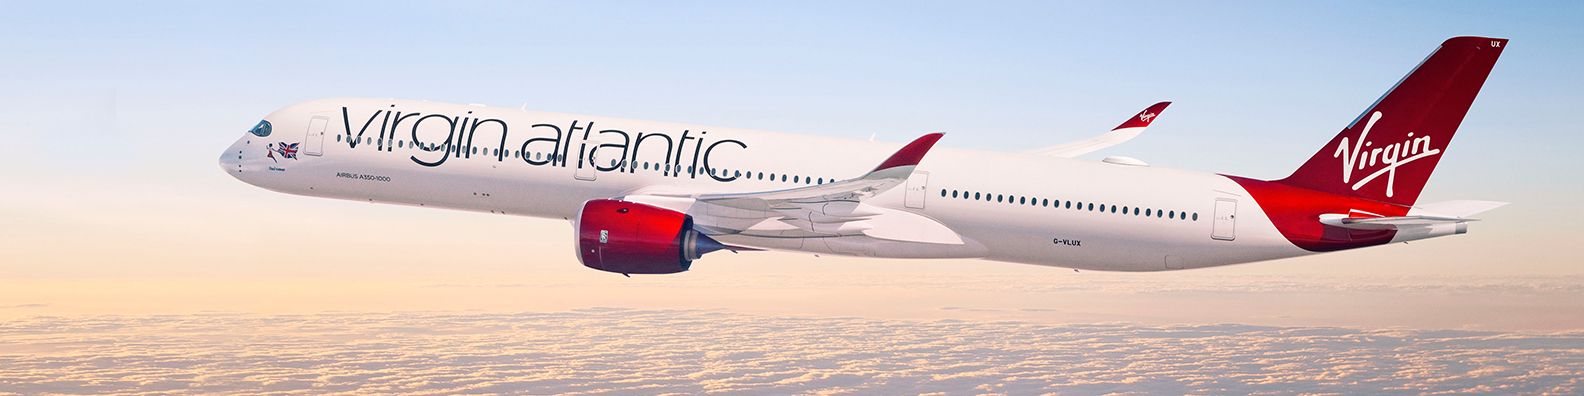 Virgin Atlantic Airways Ltd